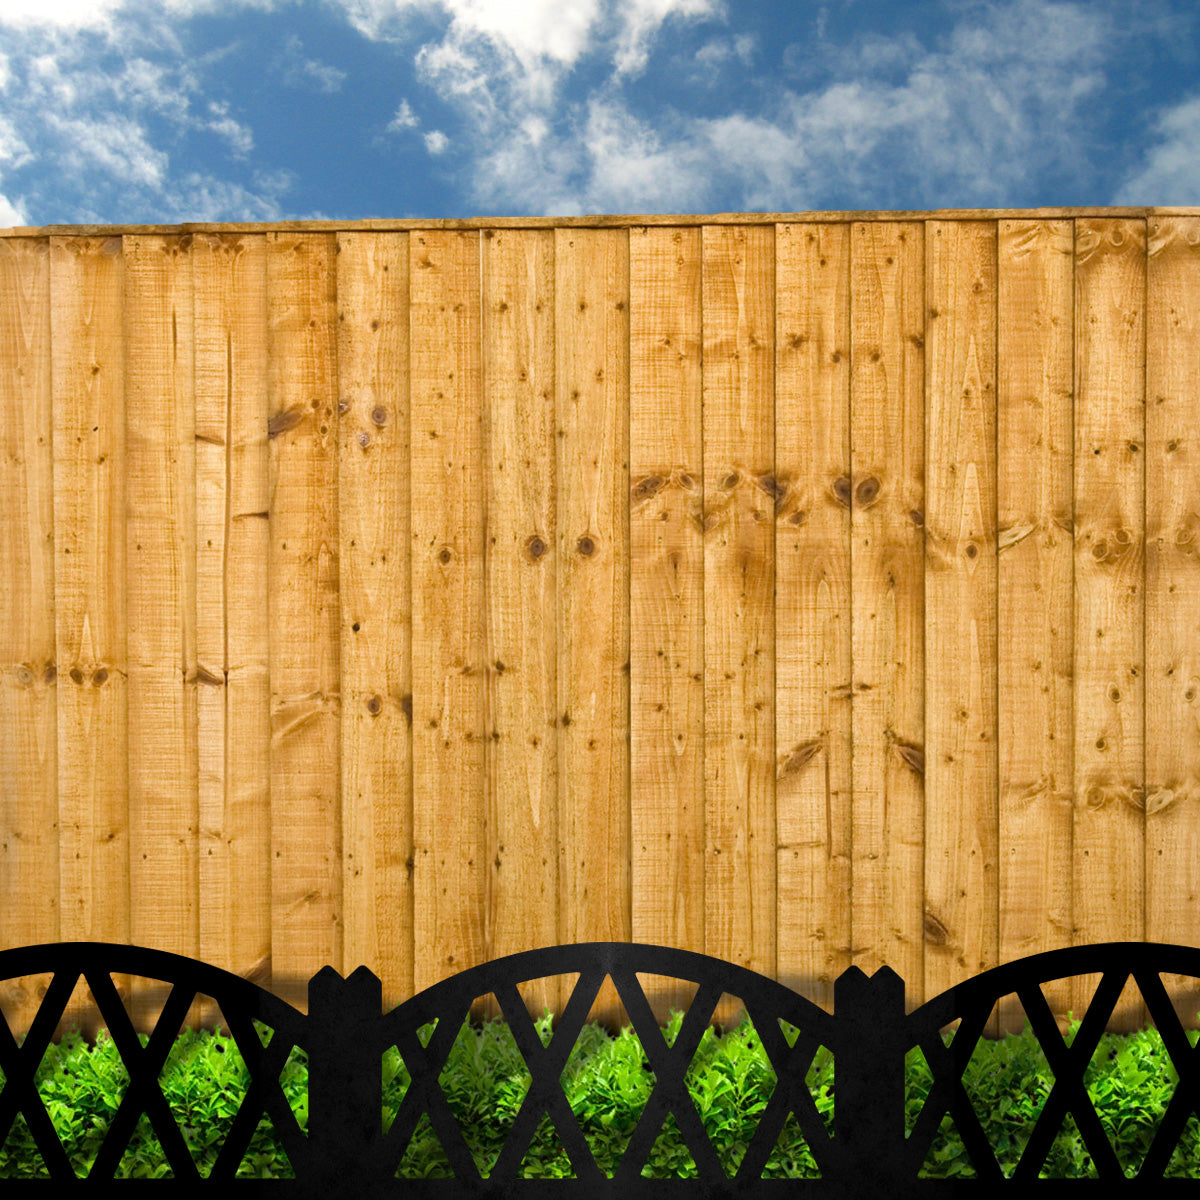 Decorative Edwardian-Style Garden Steel Picket Fence Panels